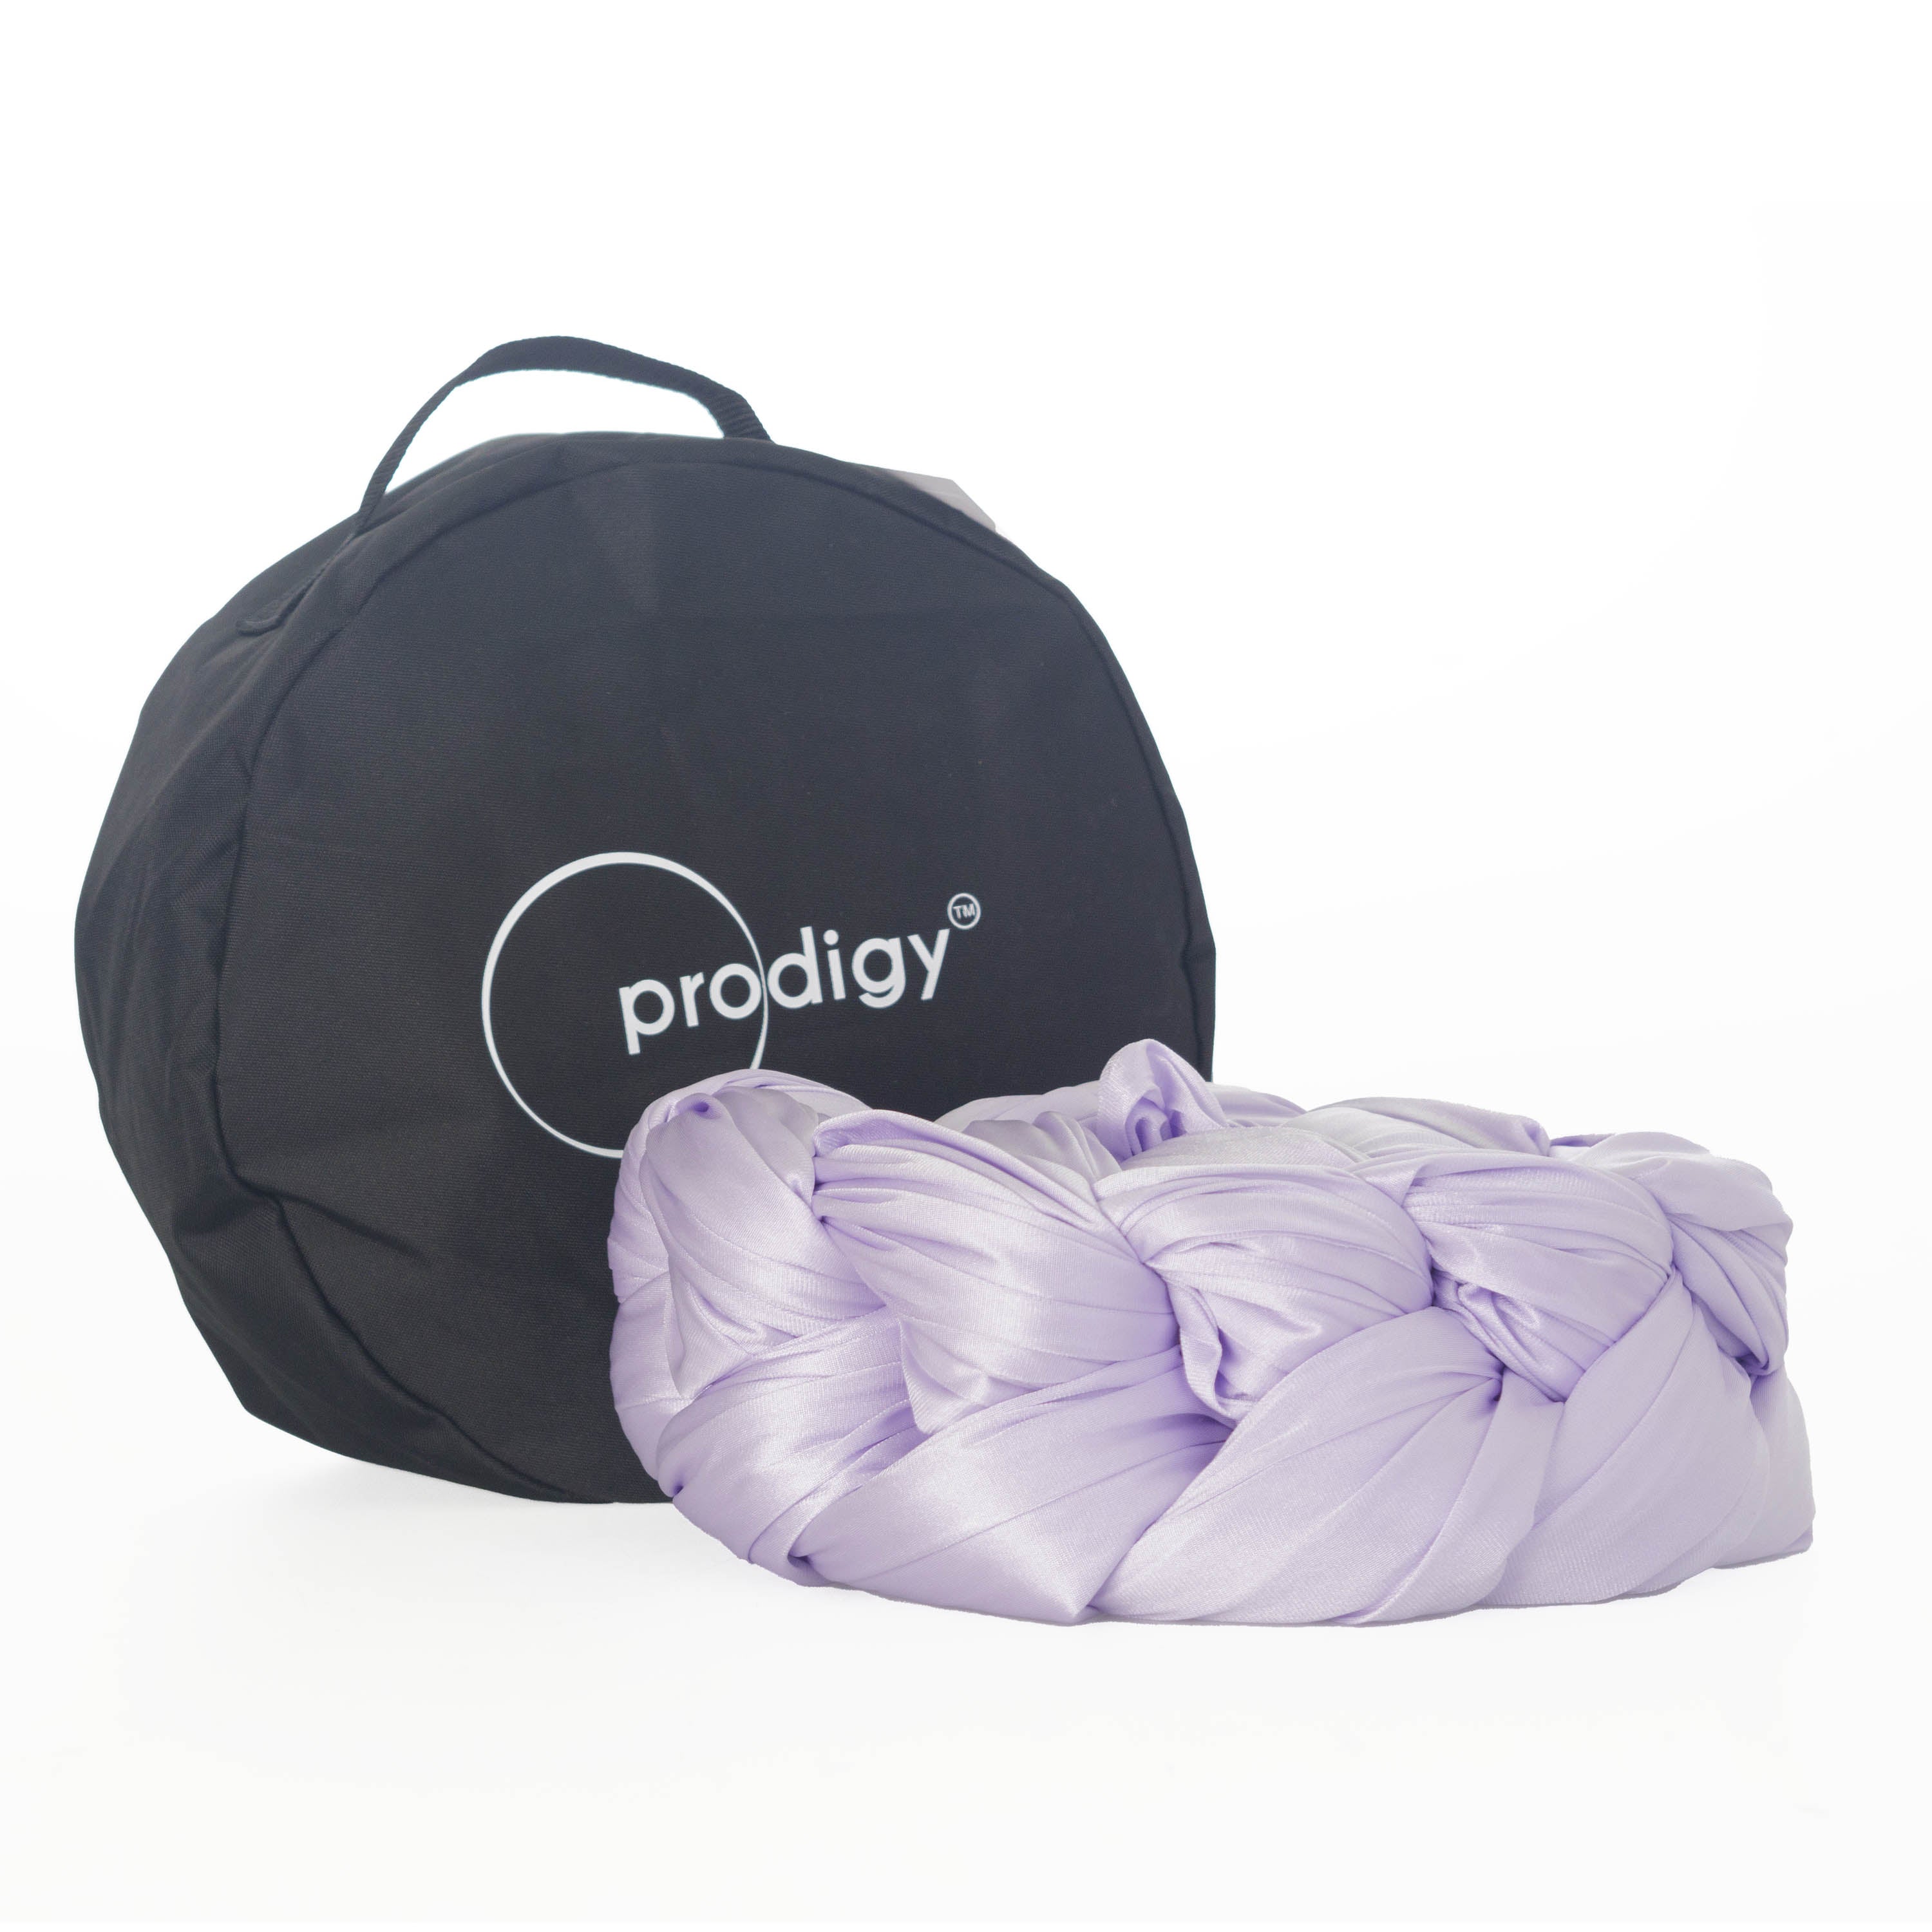 Lilac Prodigy hammock tied next to bag